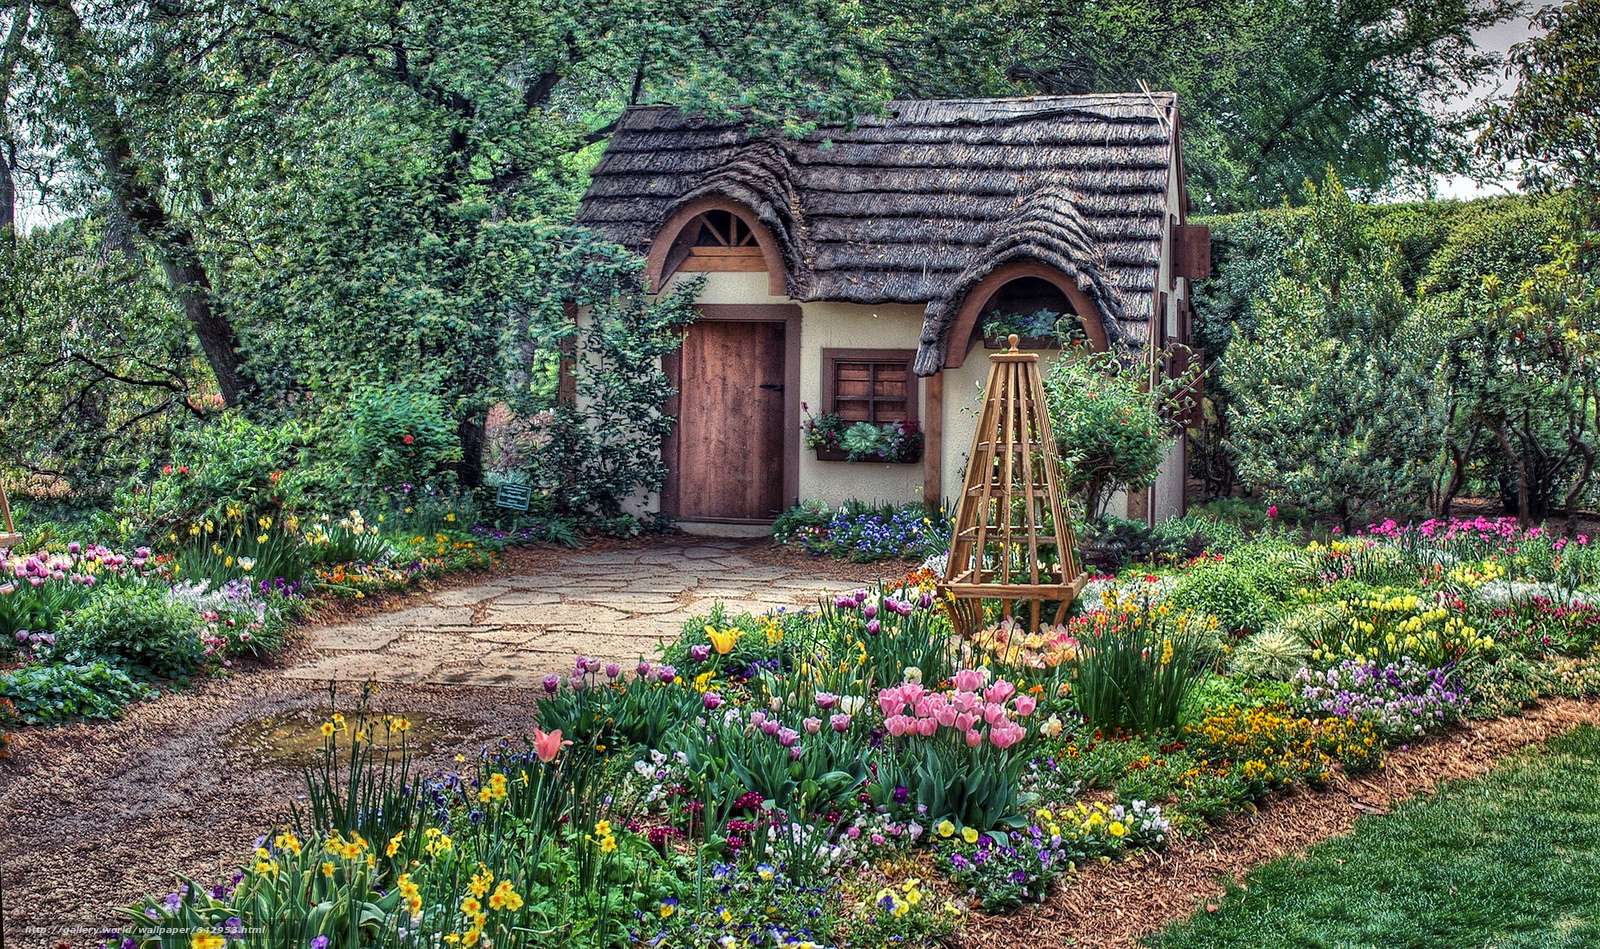 Cottage in giardino puzzle online